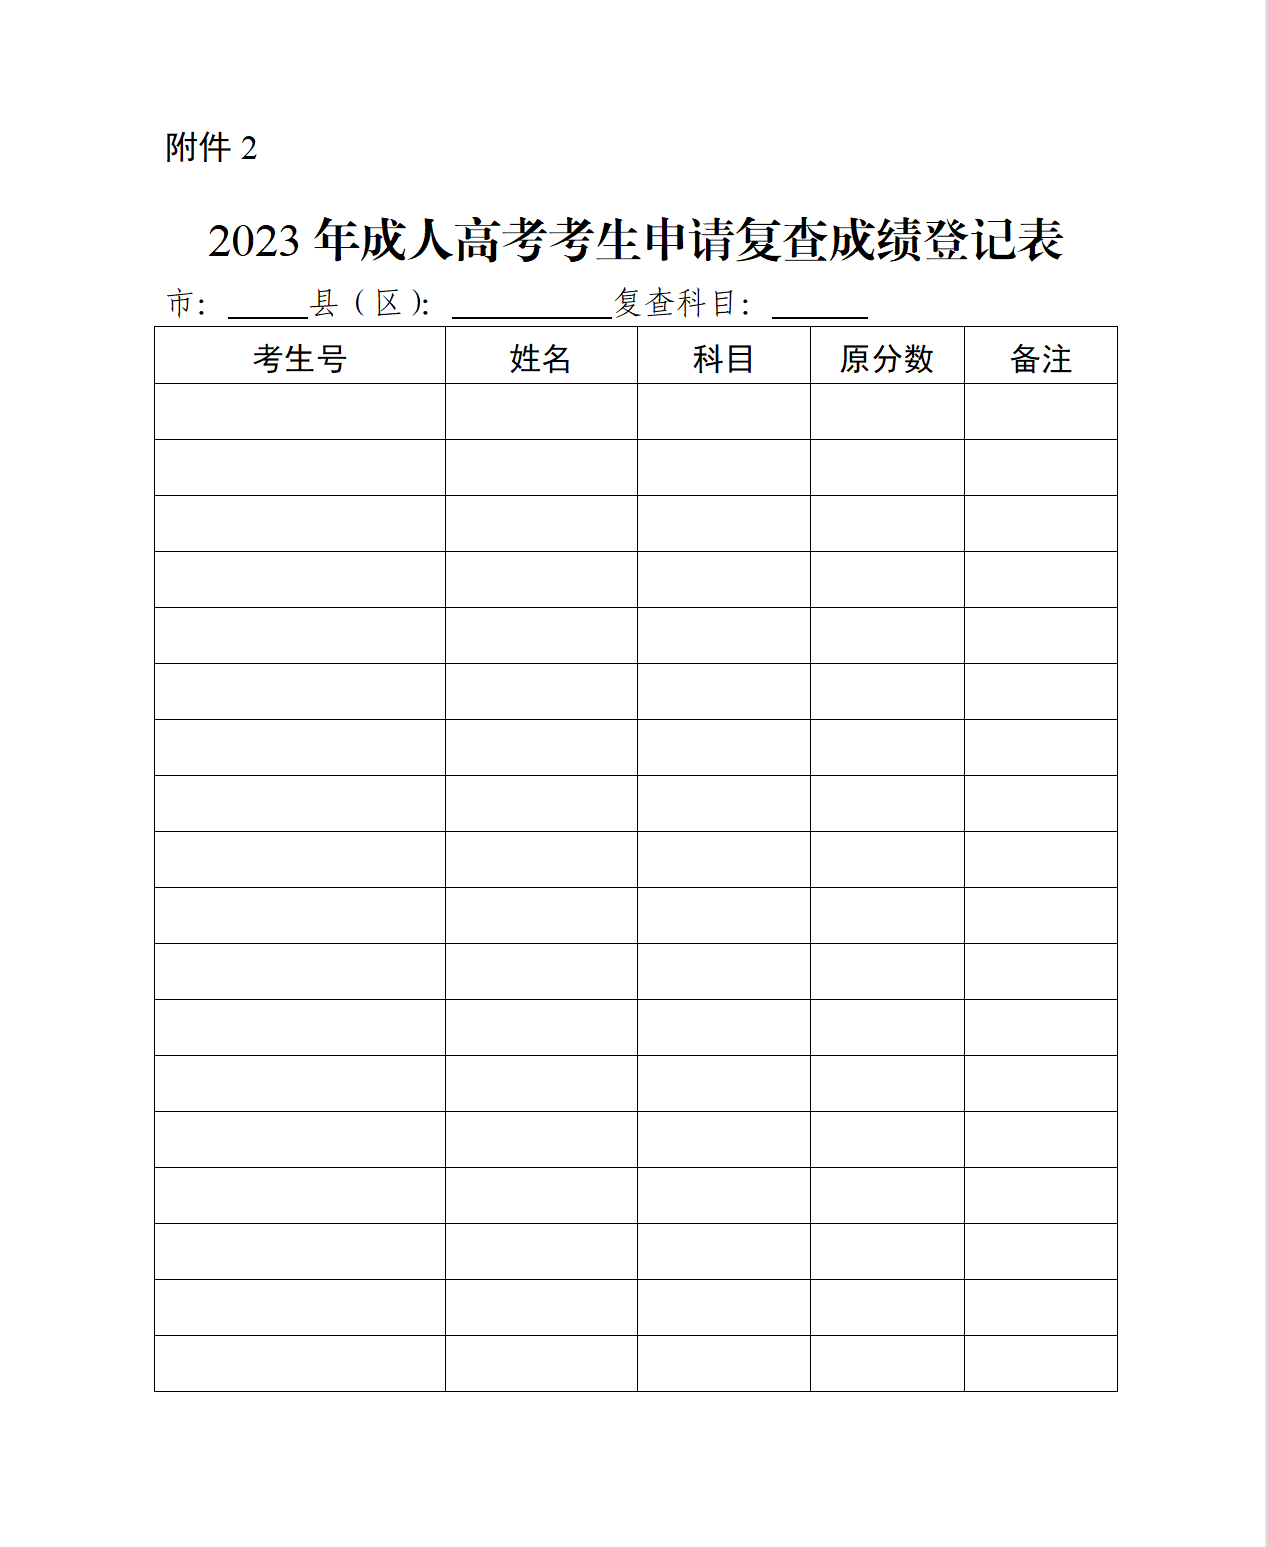 <b>2023年广州成考成绩公布</b>